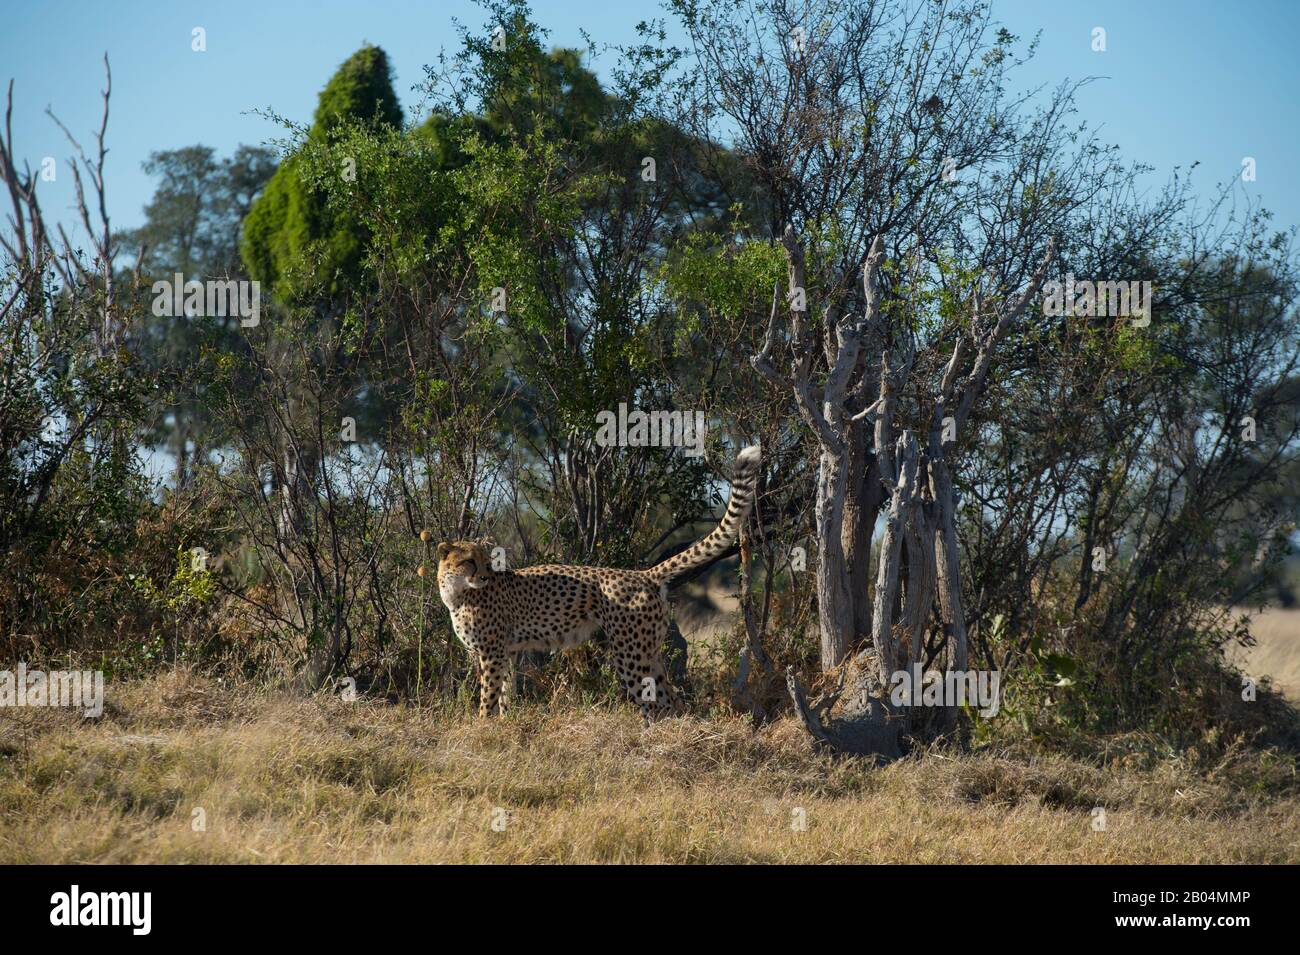 A Cheetah (Acinonyx jubatus) is marking its territory in the Chitabe area of the Okavango Delta in the northern part of Botswana. Stock Photo